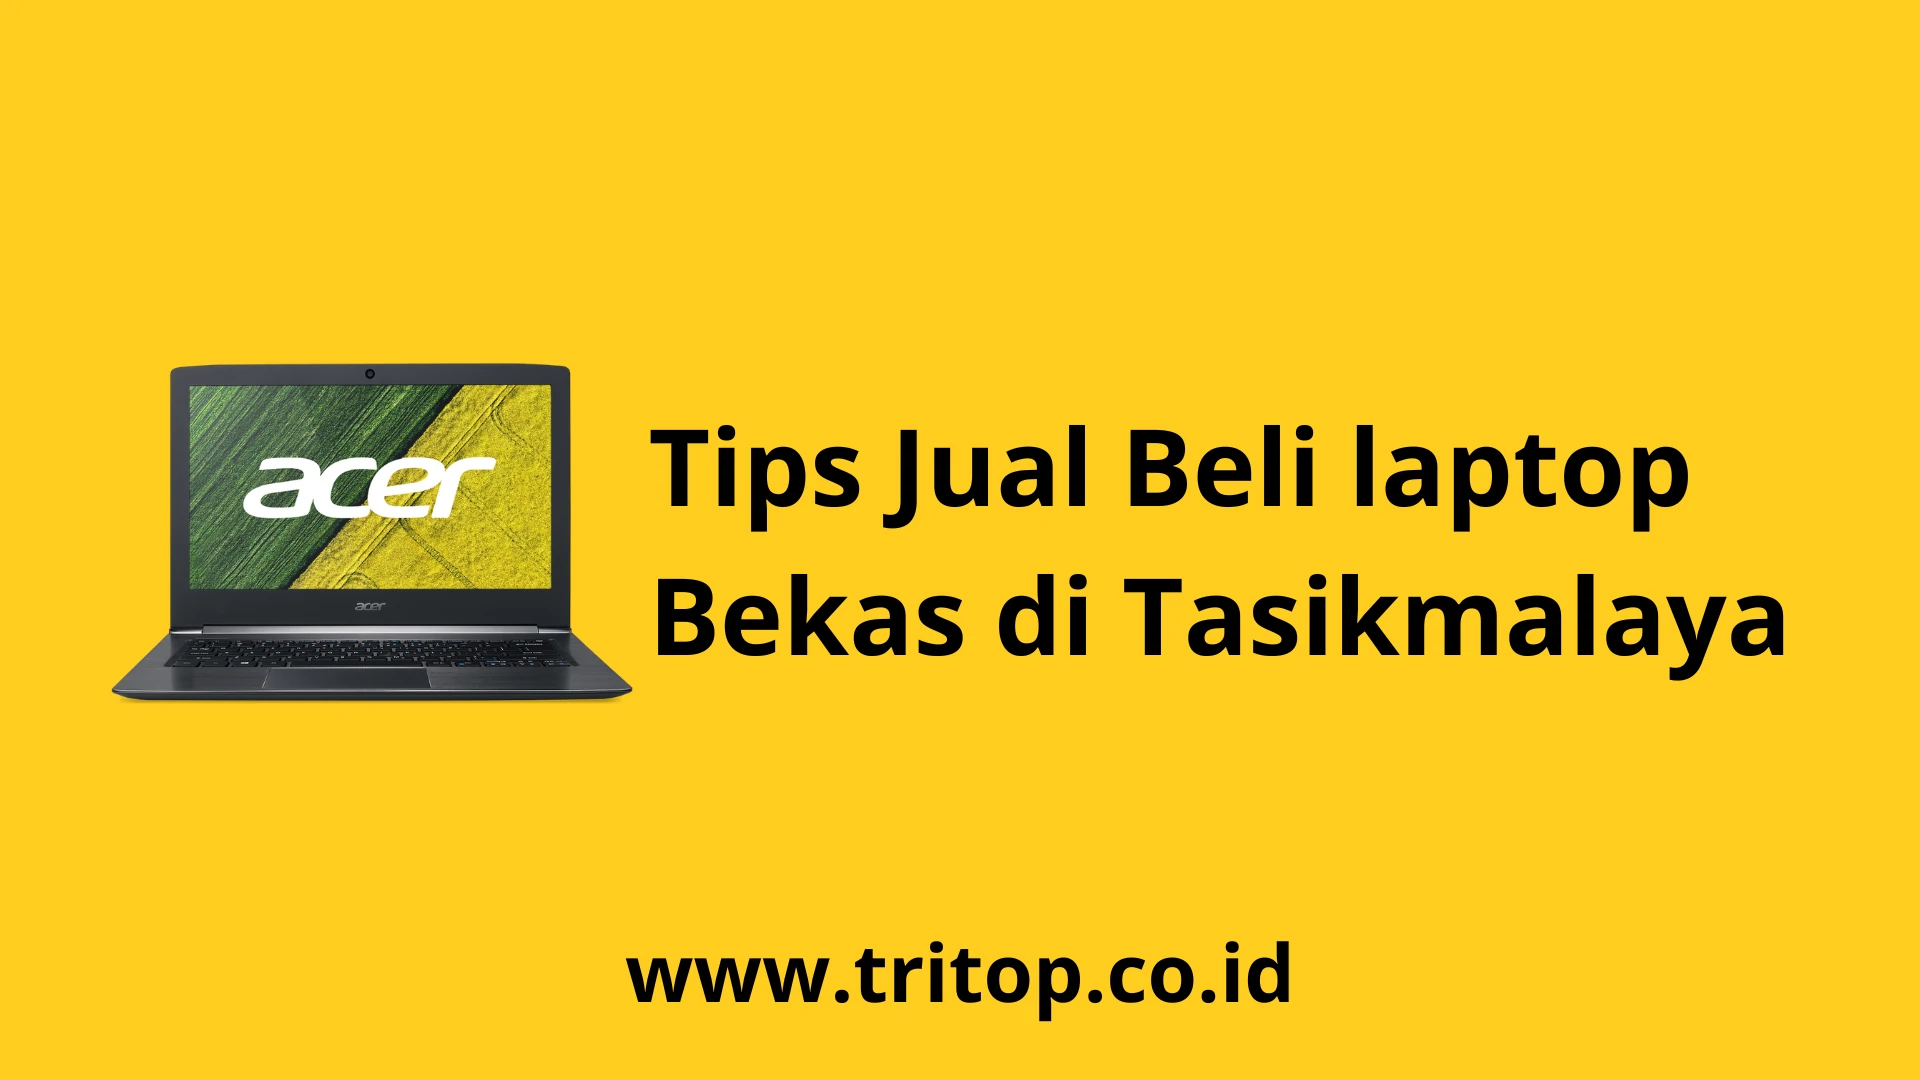 Jual Beli laptop Bekas Tasikmalaya Tritop.co.id